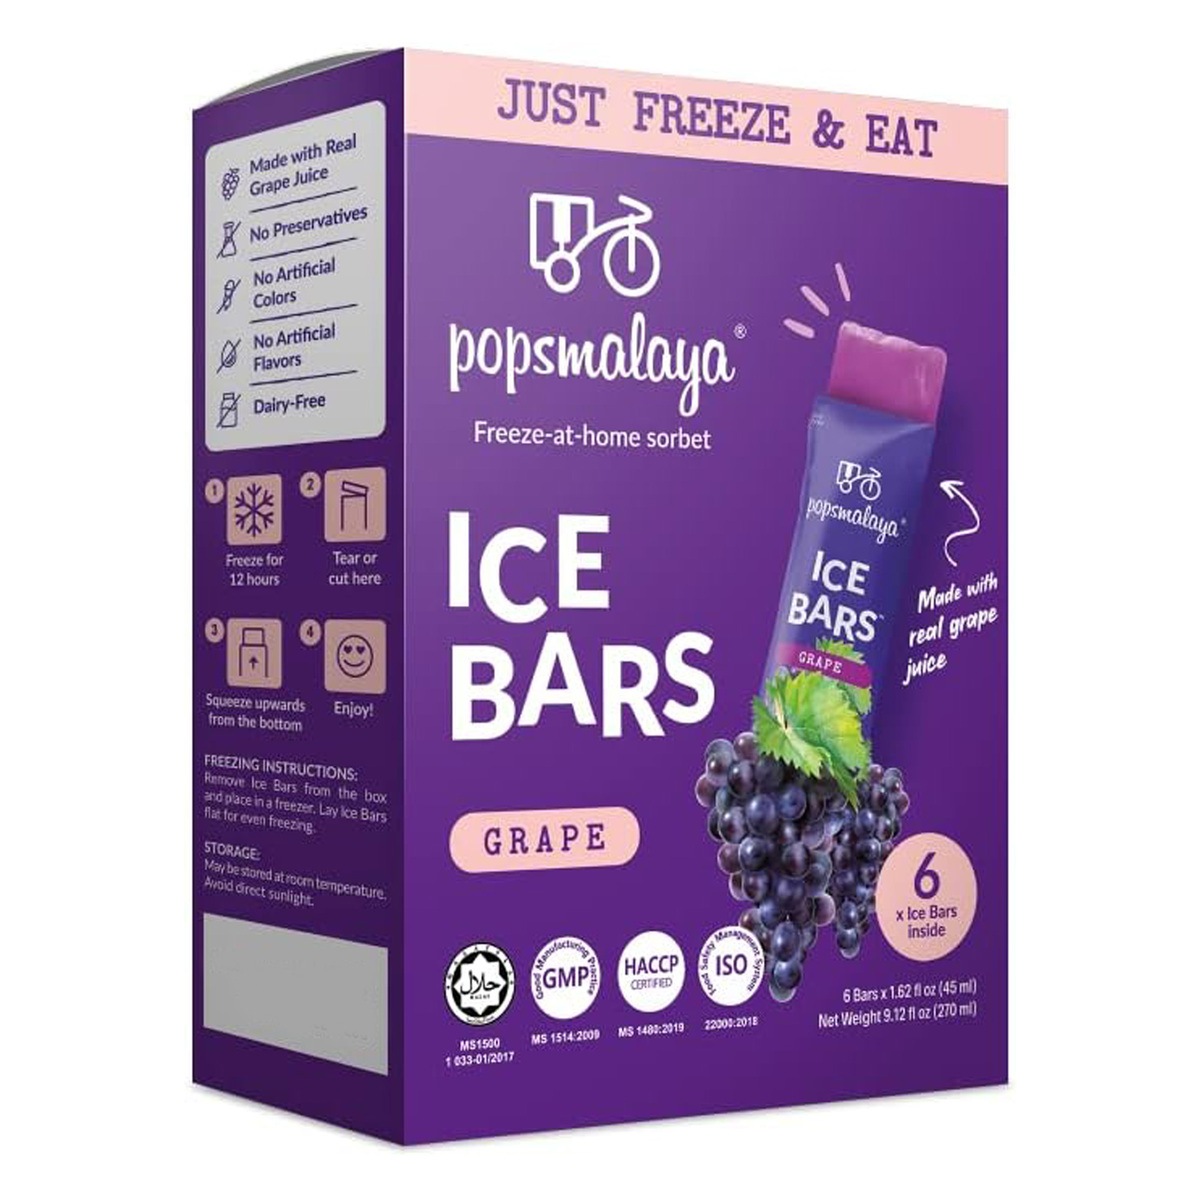 Pops Malaya Ice Bars Grape, 6 Pcs, 270 ml